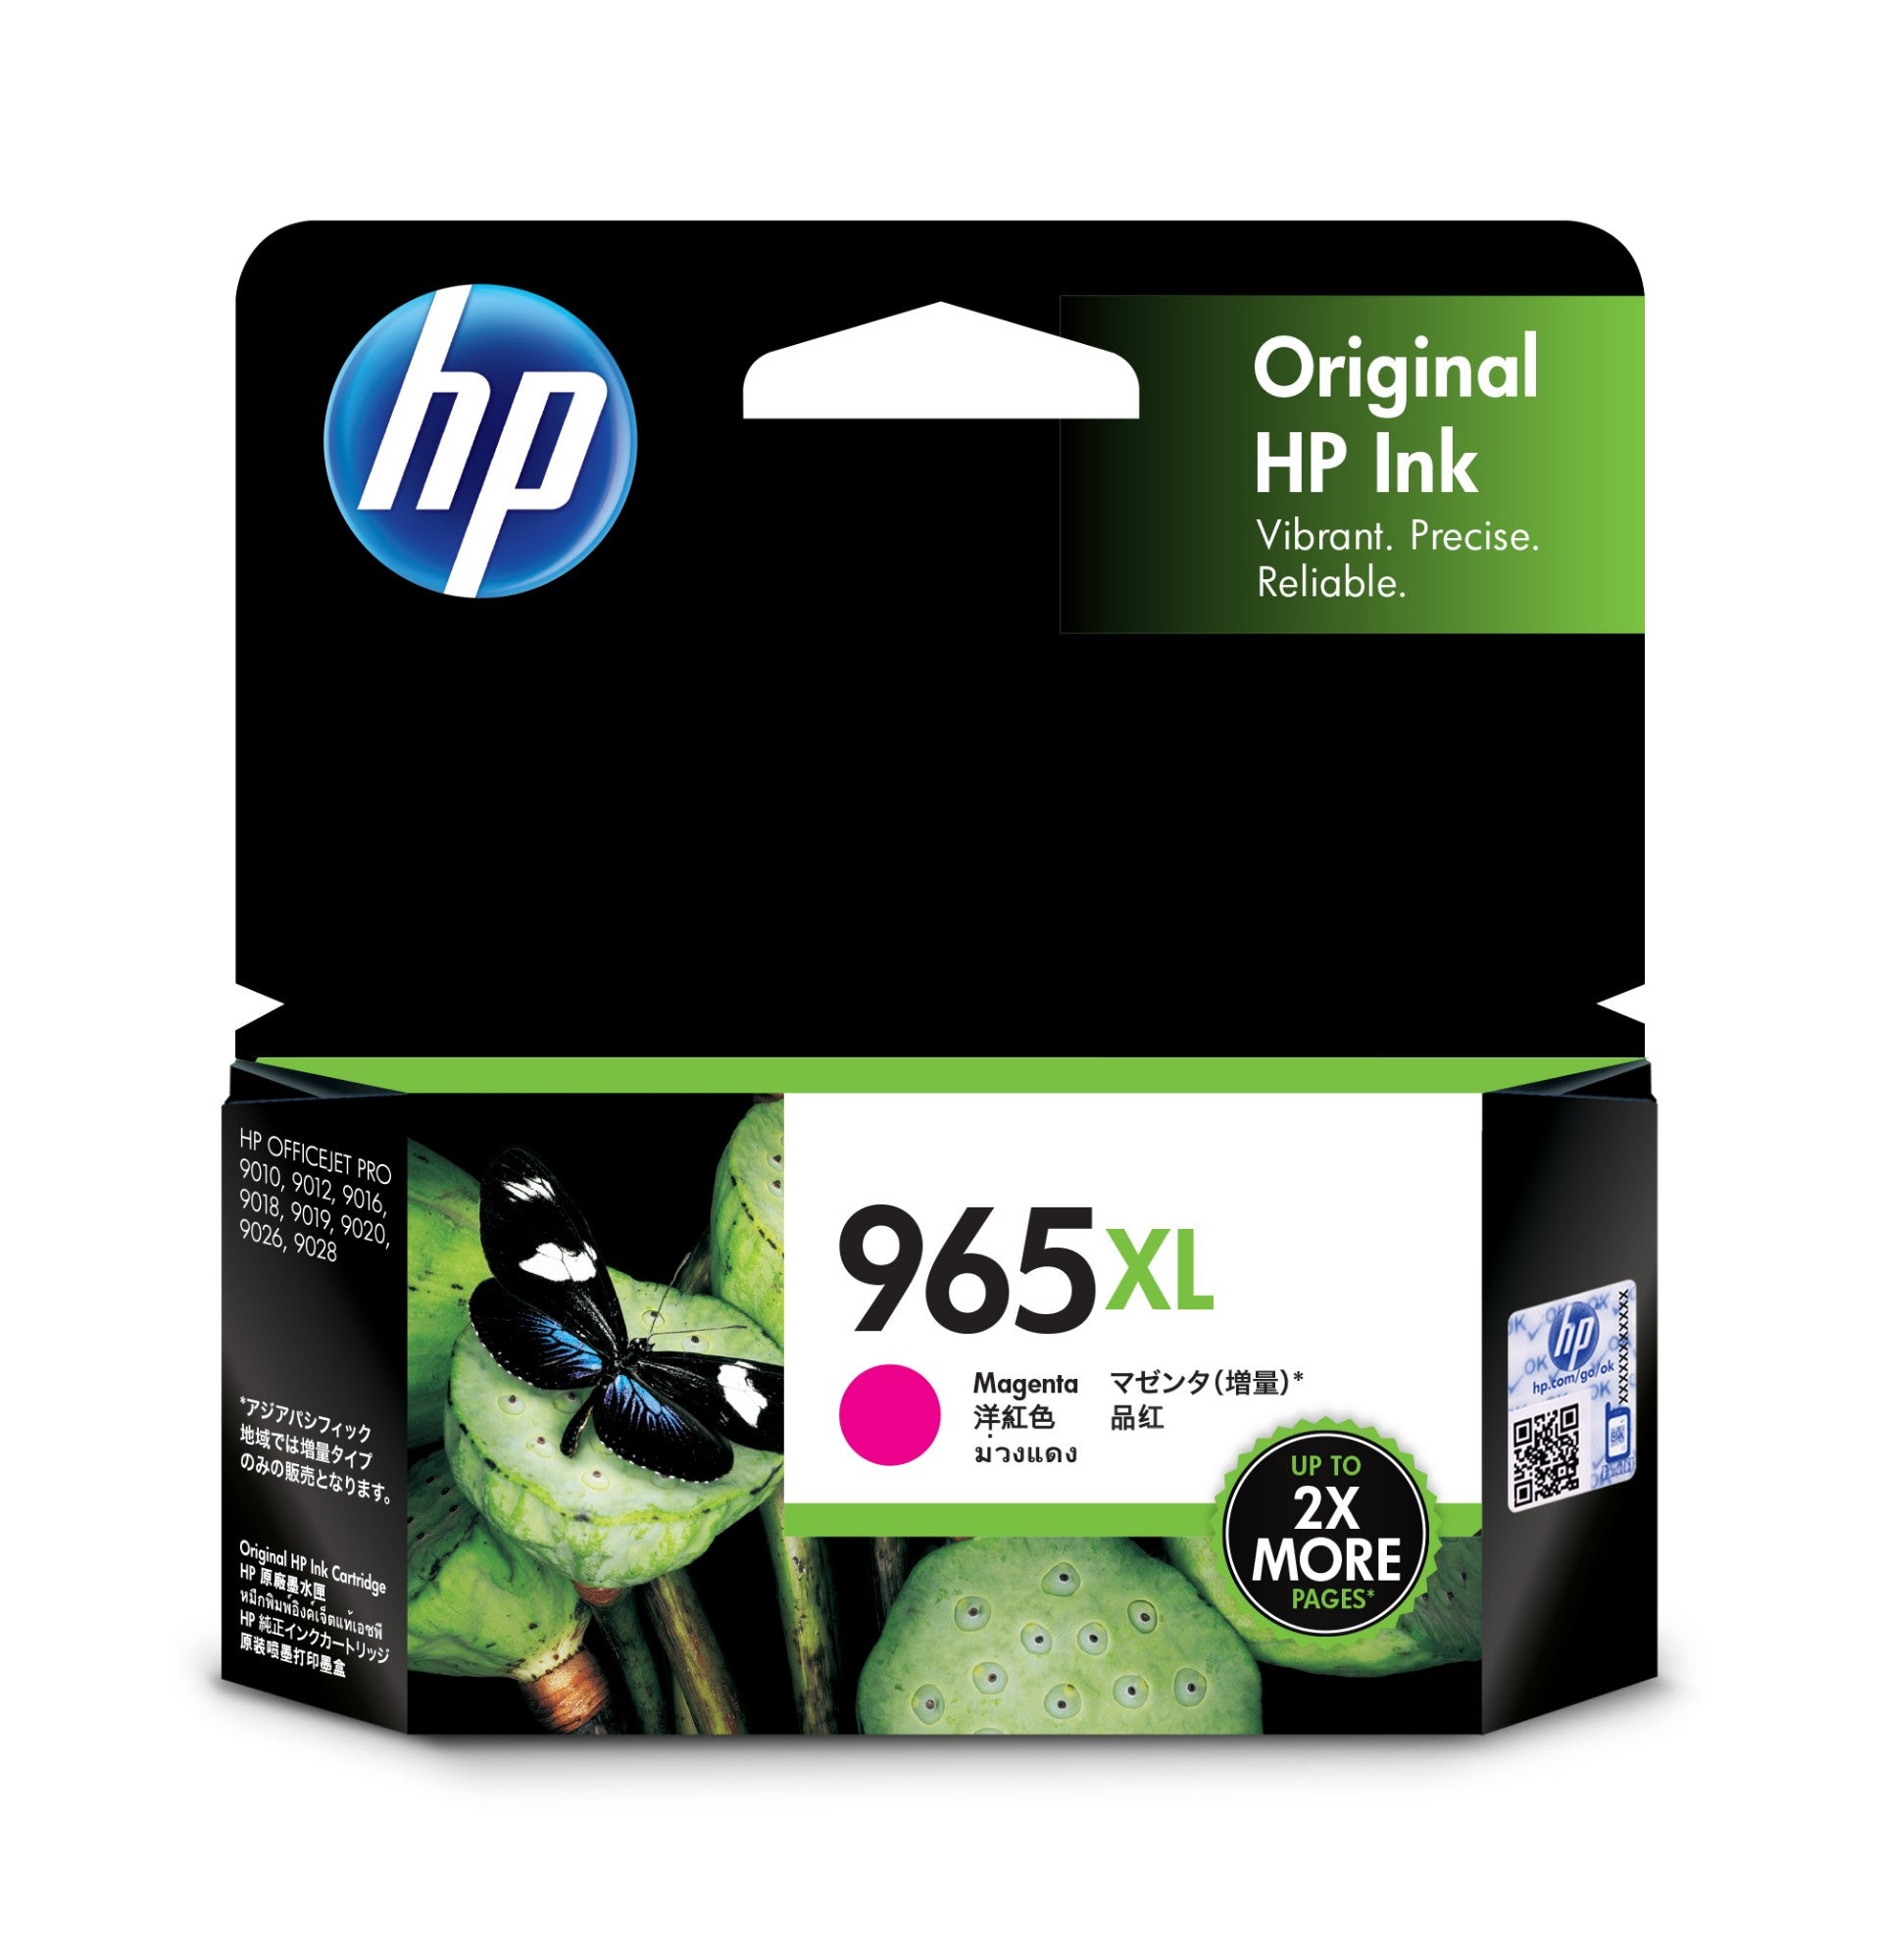 HP 965XL Genuine High Yield Ink Cartridge